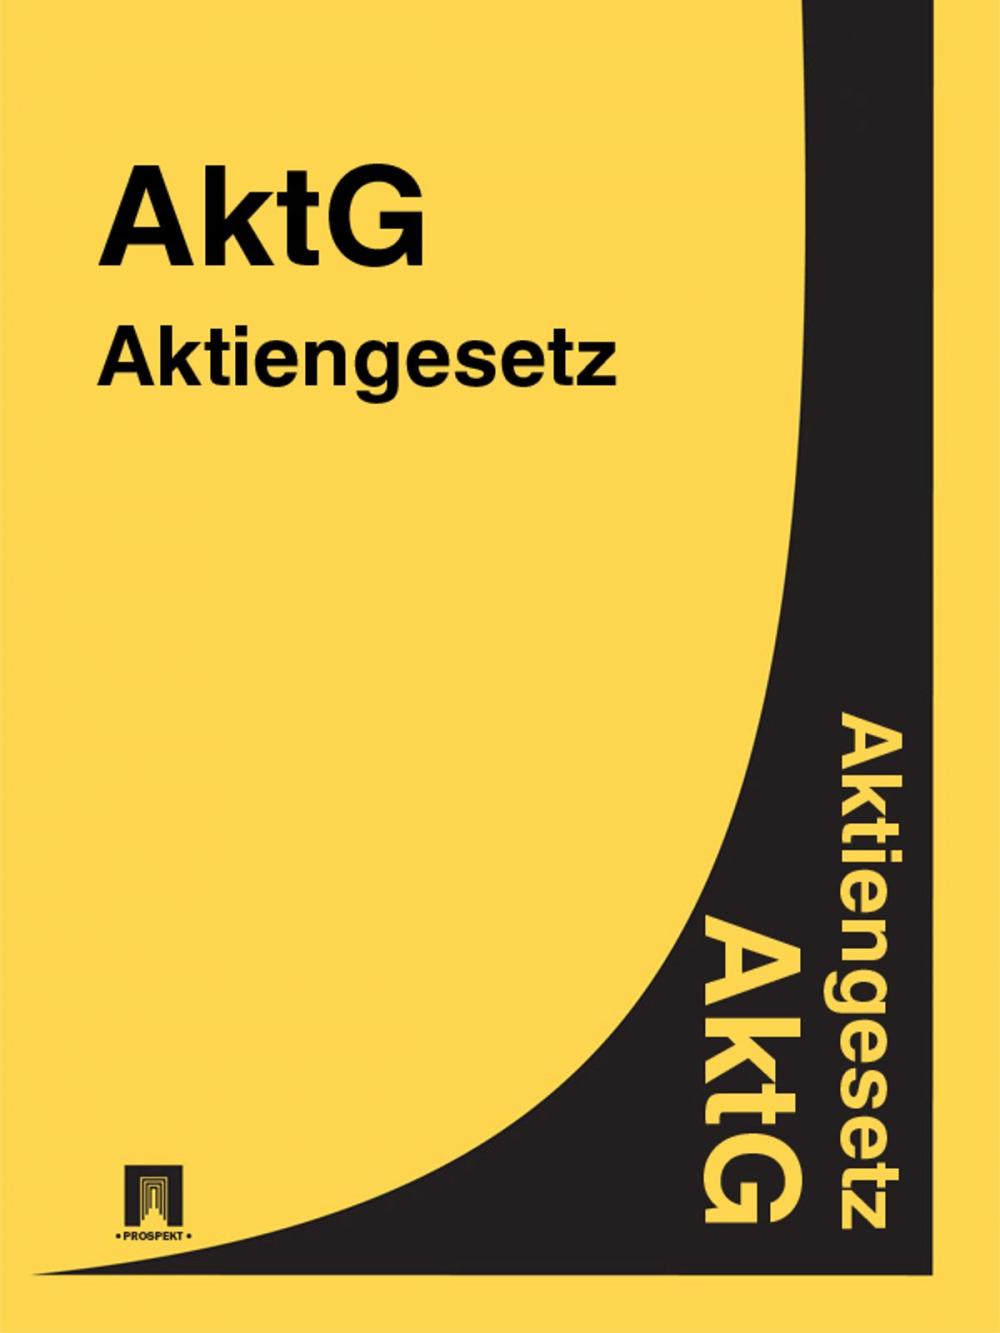 Big bigCover of Aktiengesetz - AktG